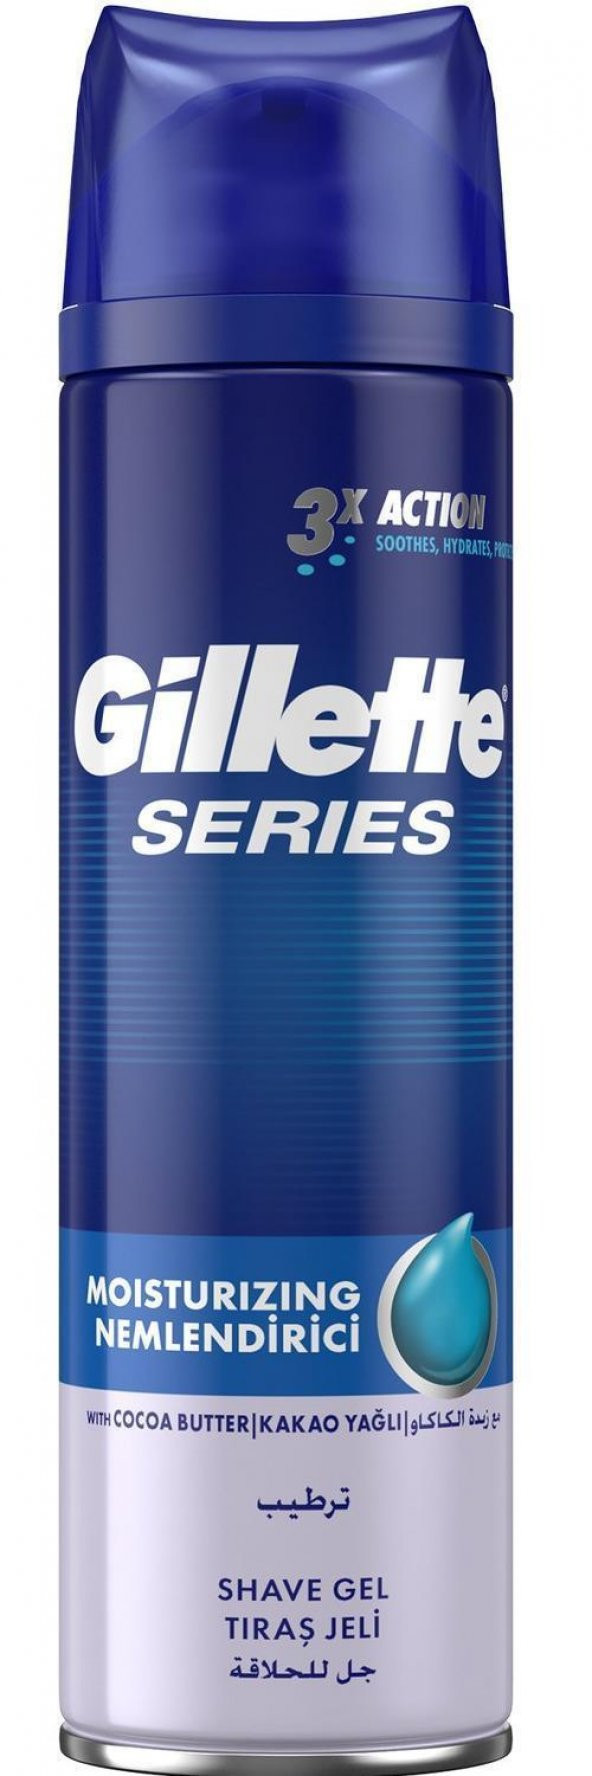 Gillette Traş Jeli Serıes Nemlendirici 200 Ml